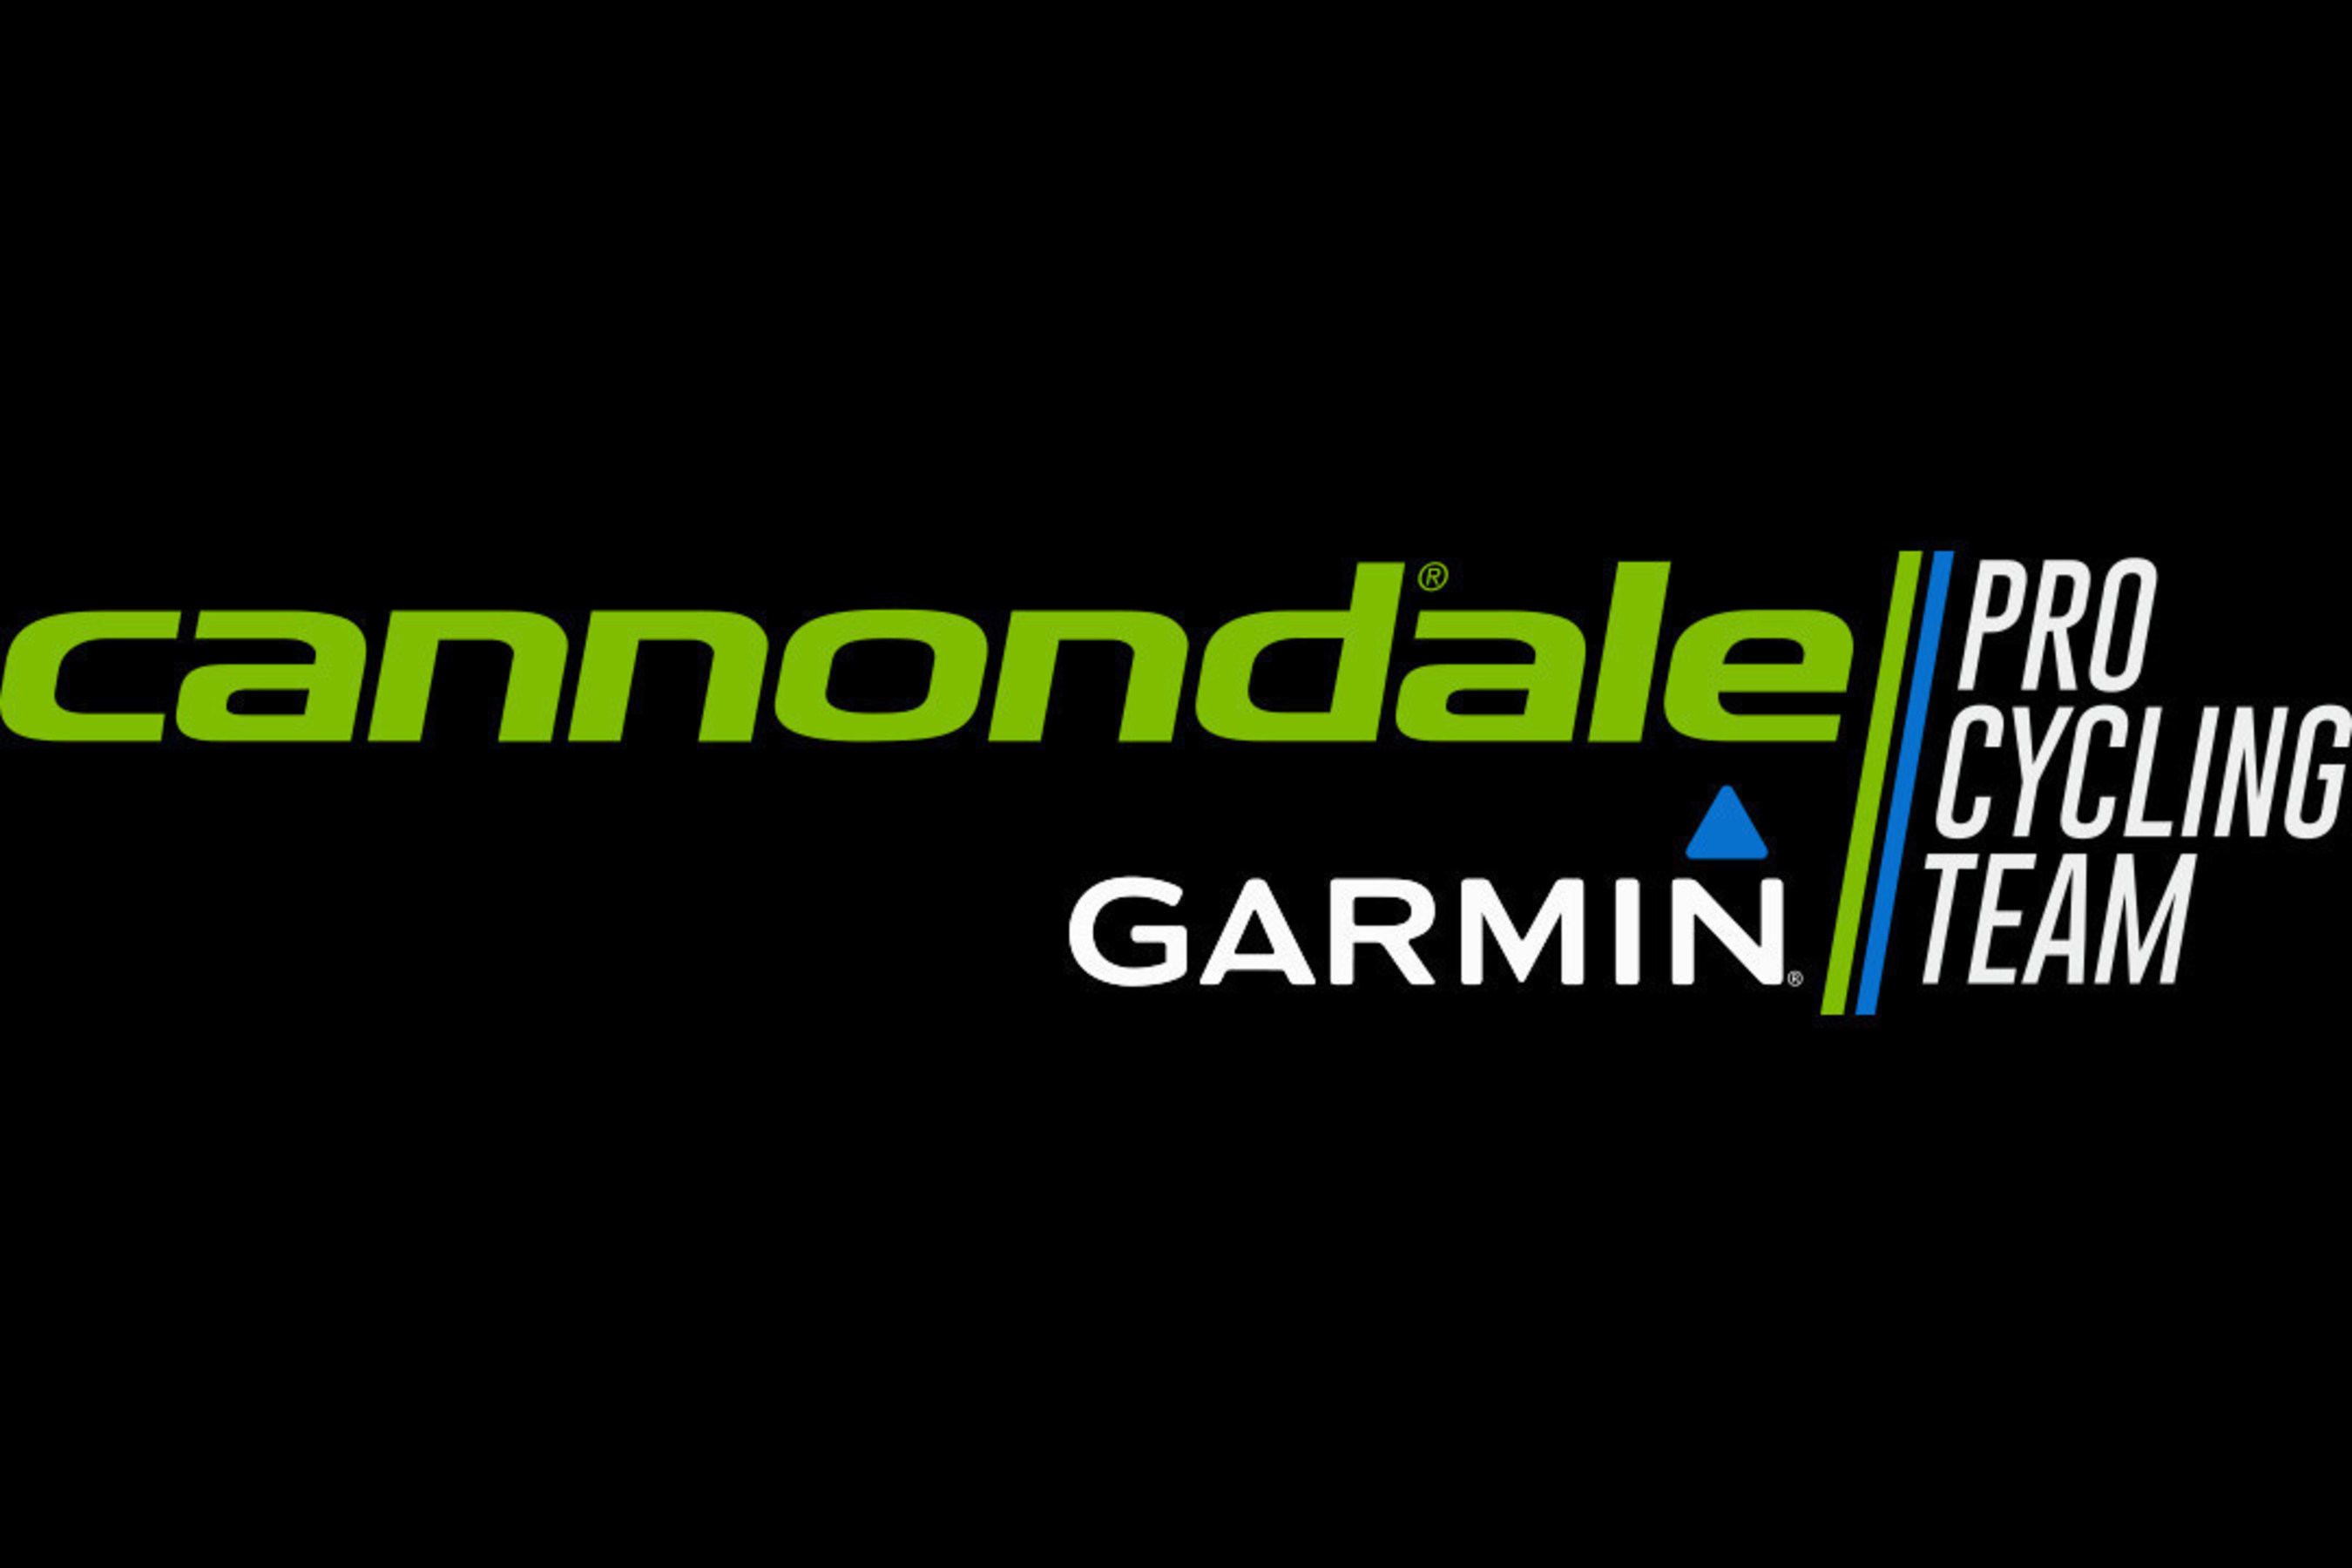 Cannondale-Garmin Pro Cycling Team